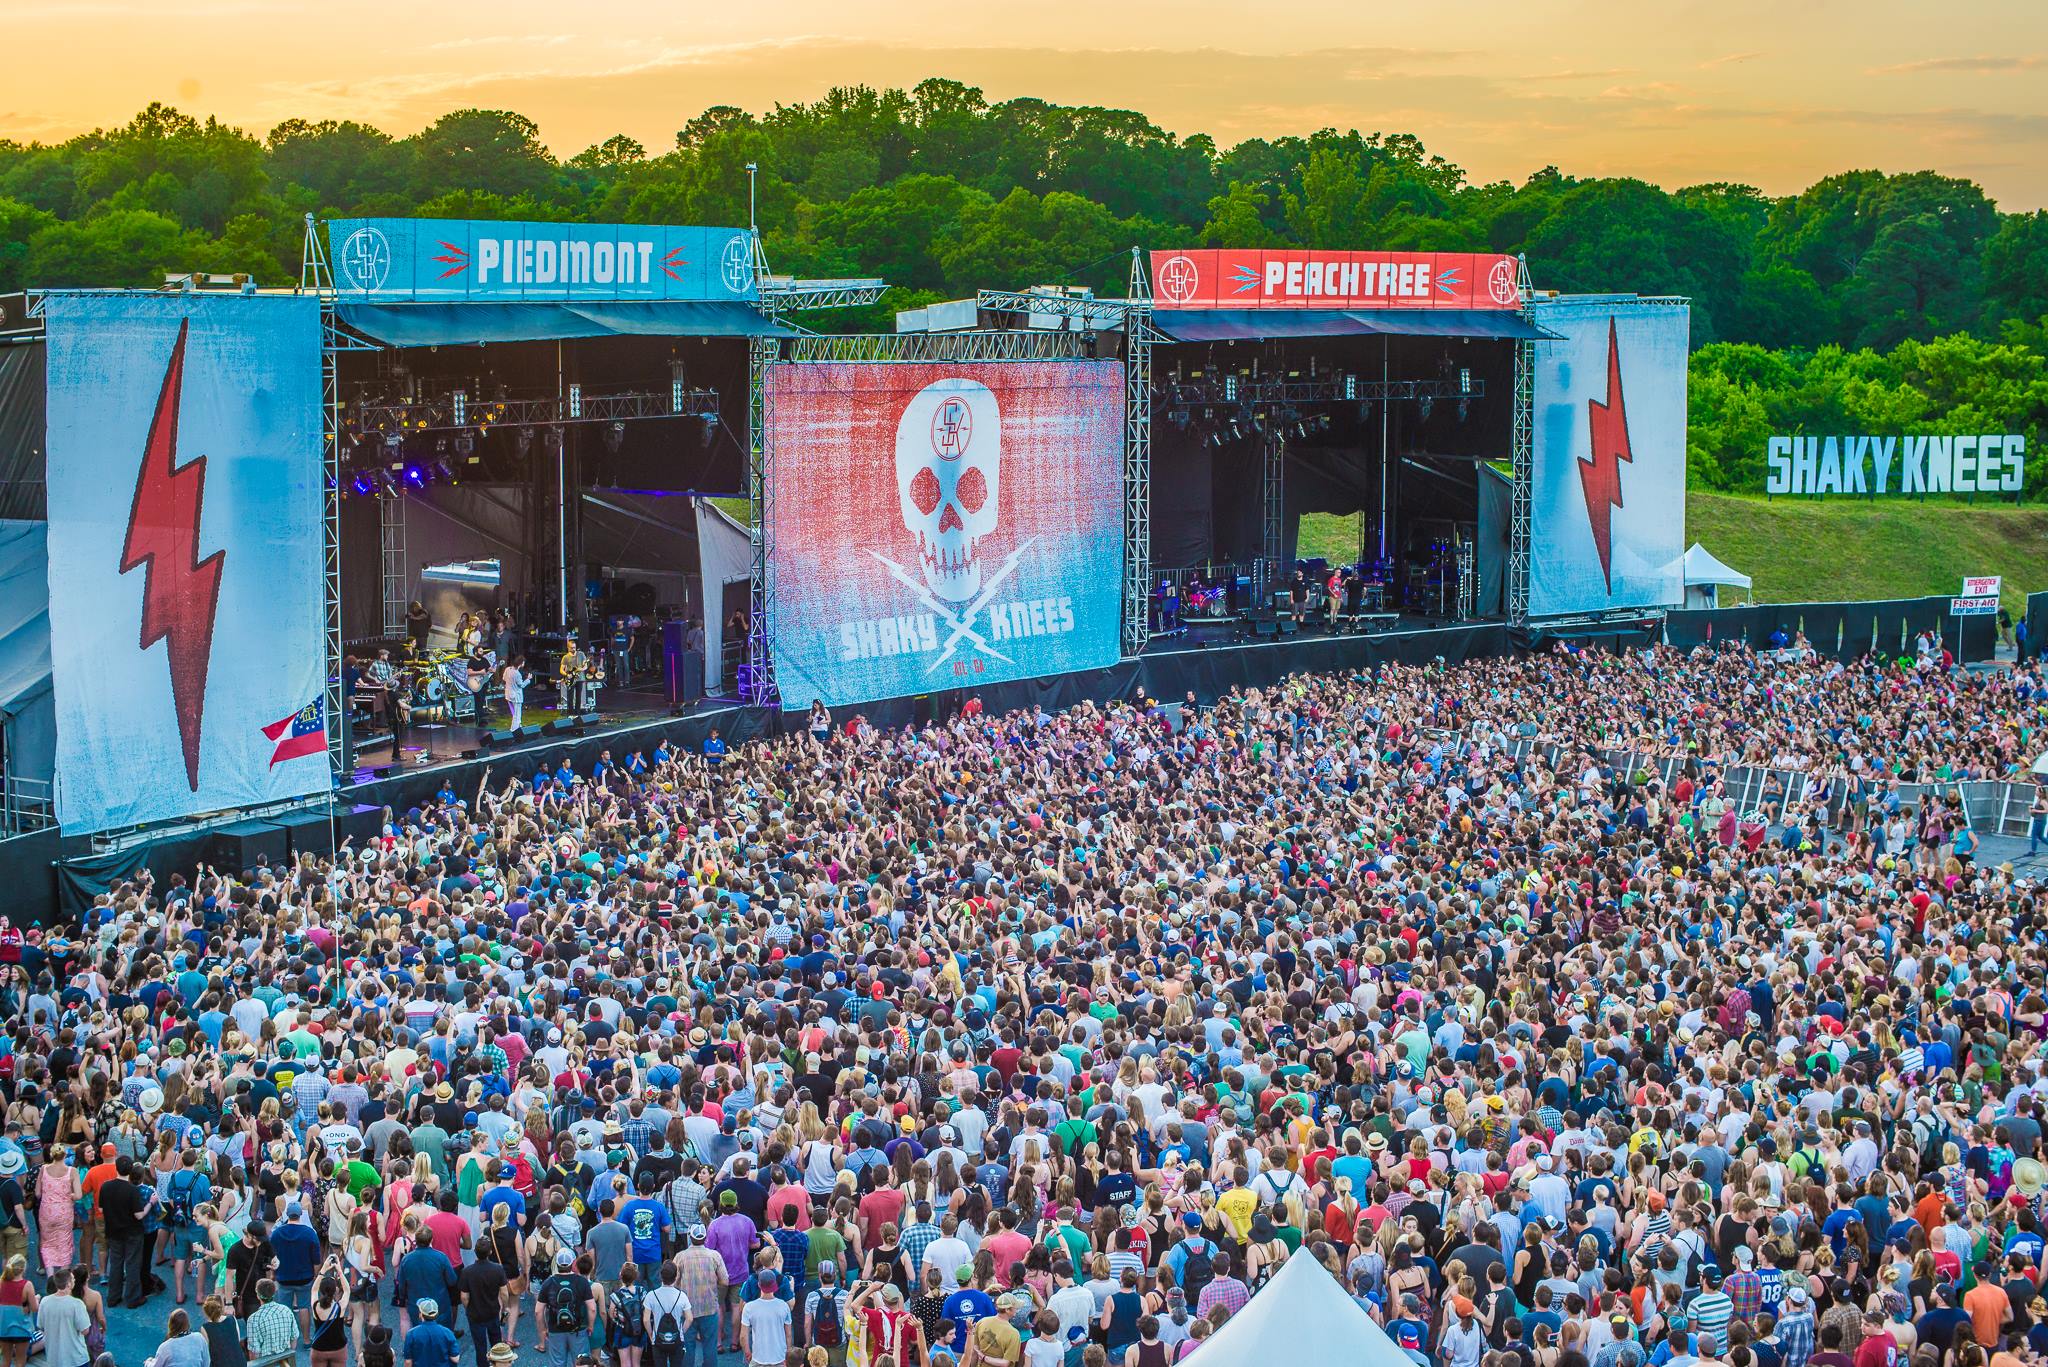 Shaky Knees Music Festival in Atlanta, GA. Source